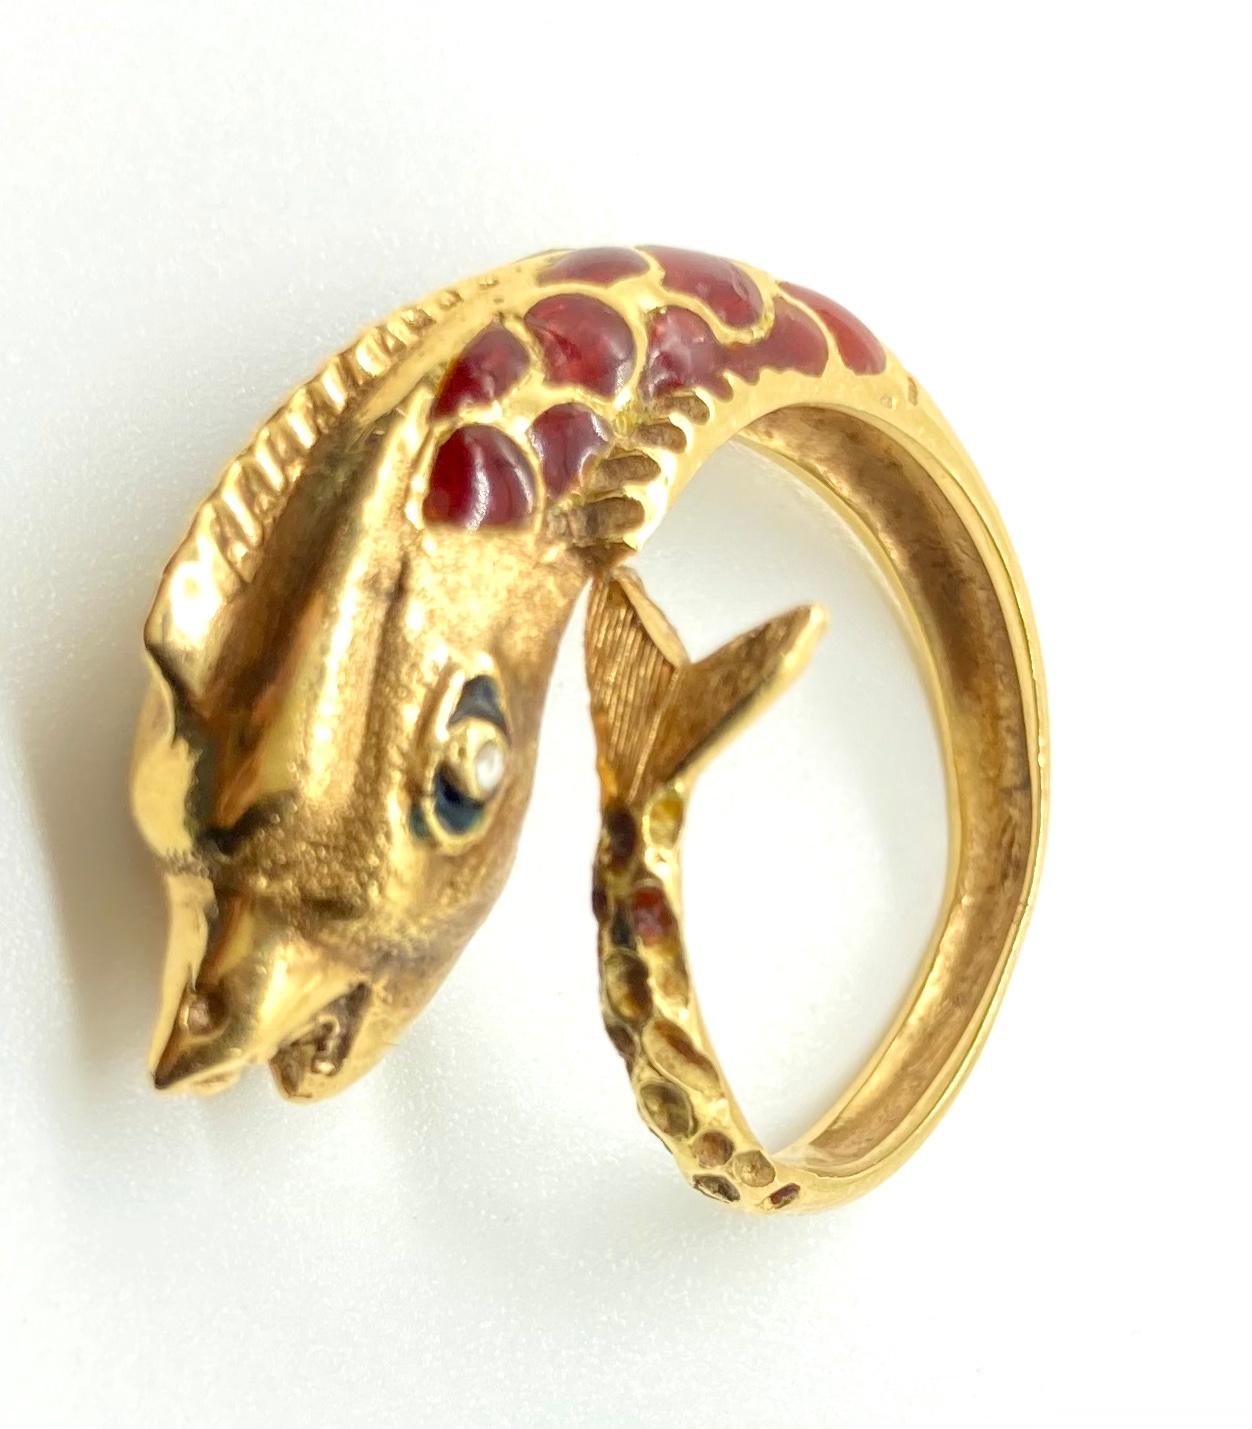 A fun enamel and 18 karat yellow gold fish ring. Made in Italy, circa 1970.